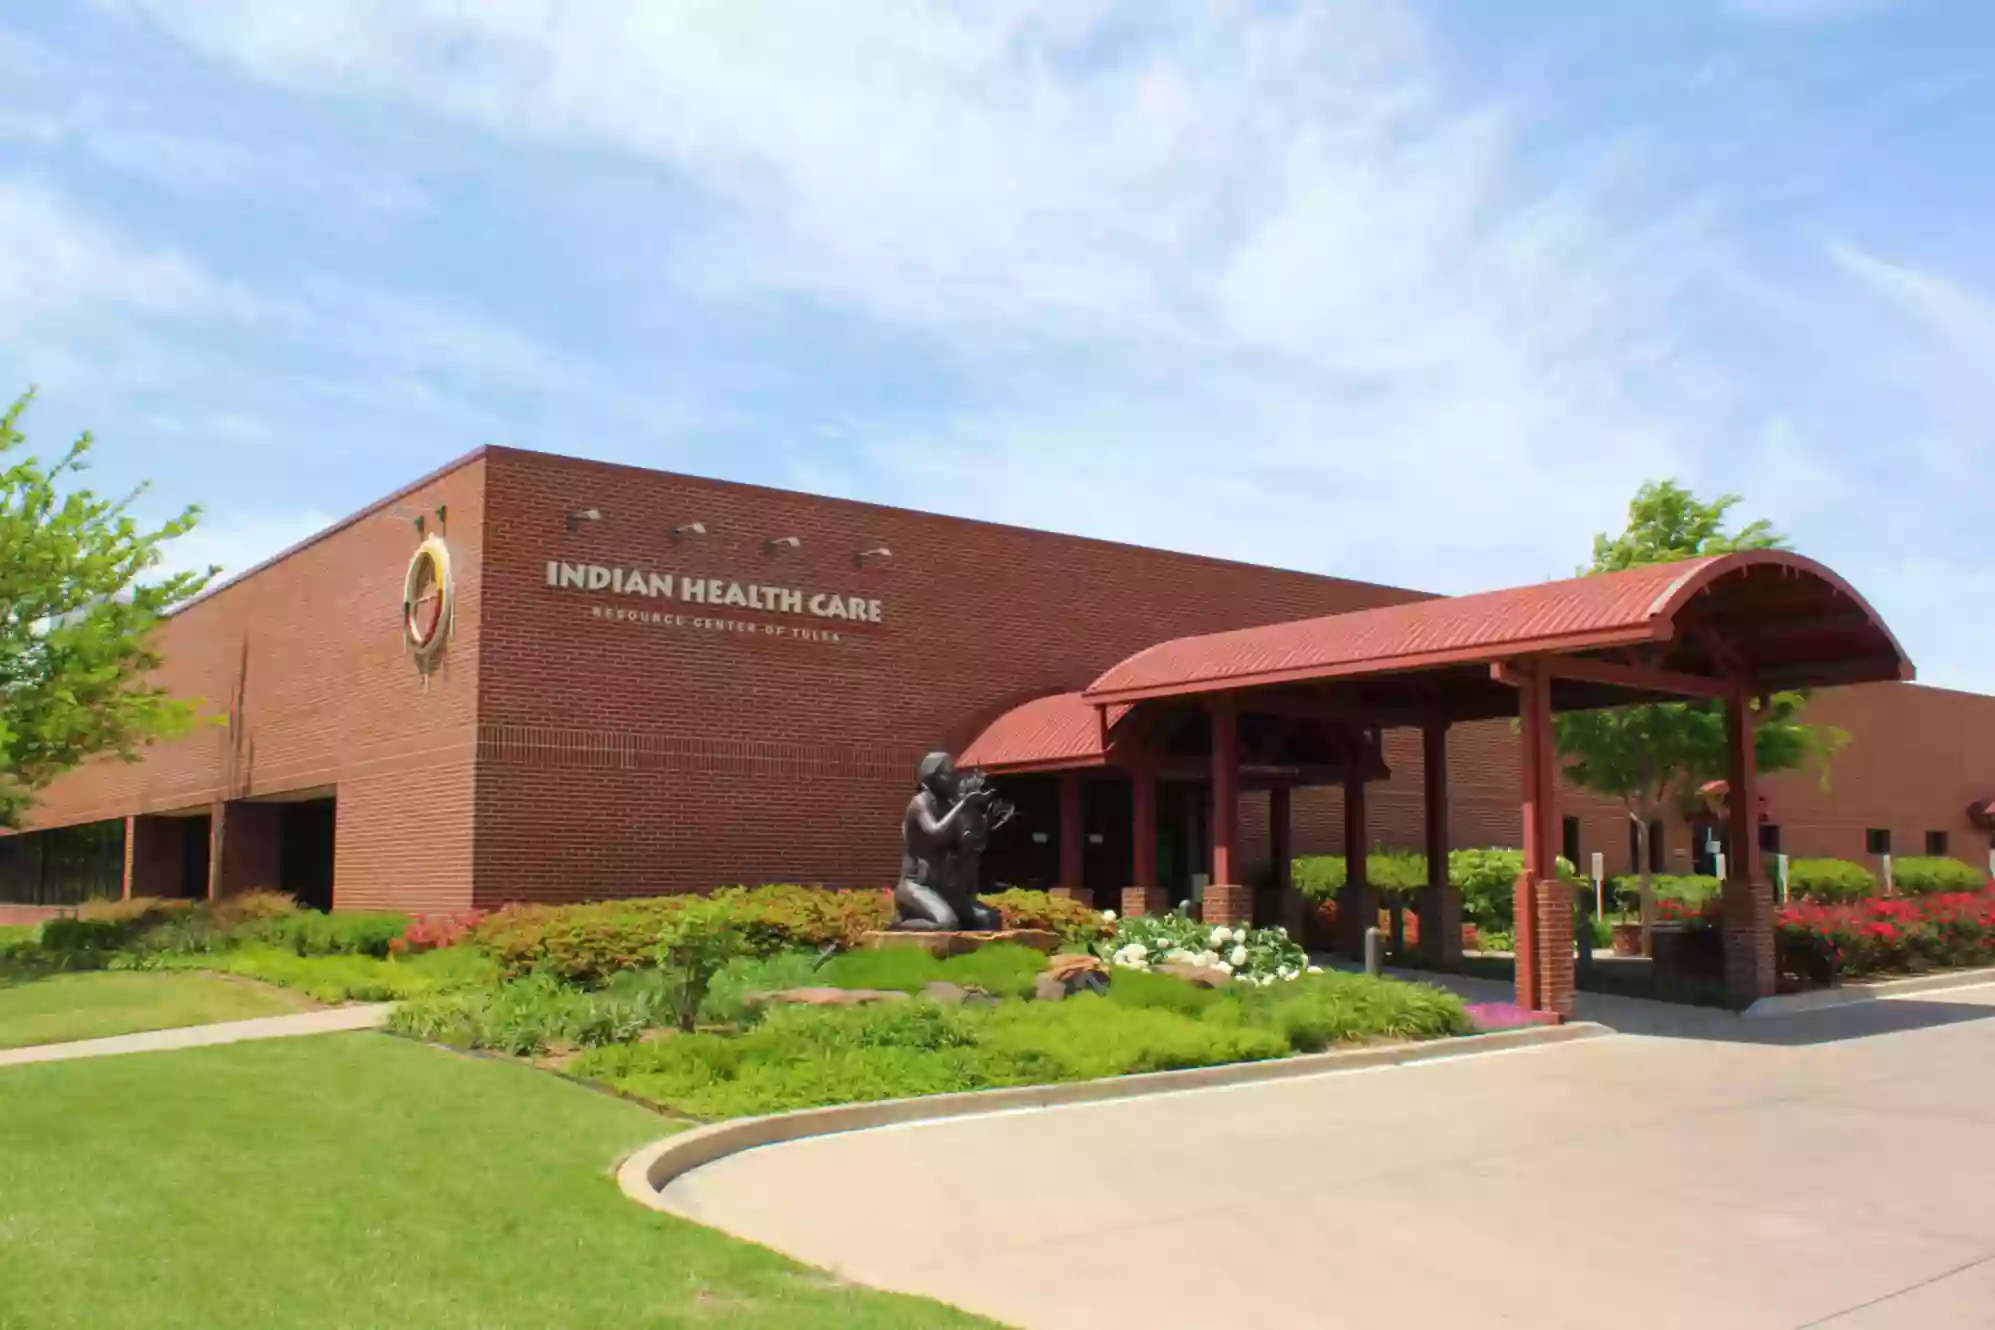 Indian Health Care Resource Center of Tulsa